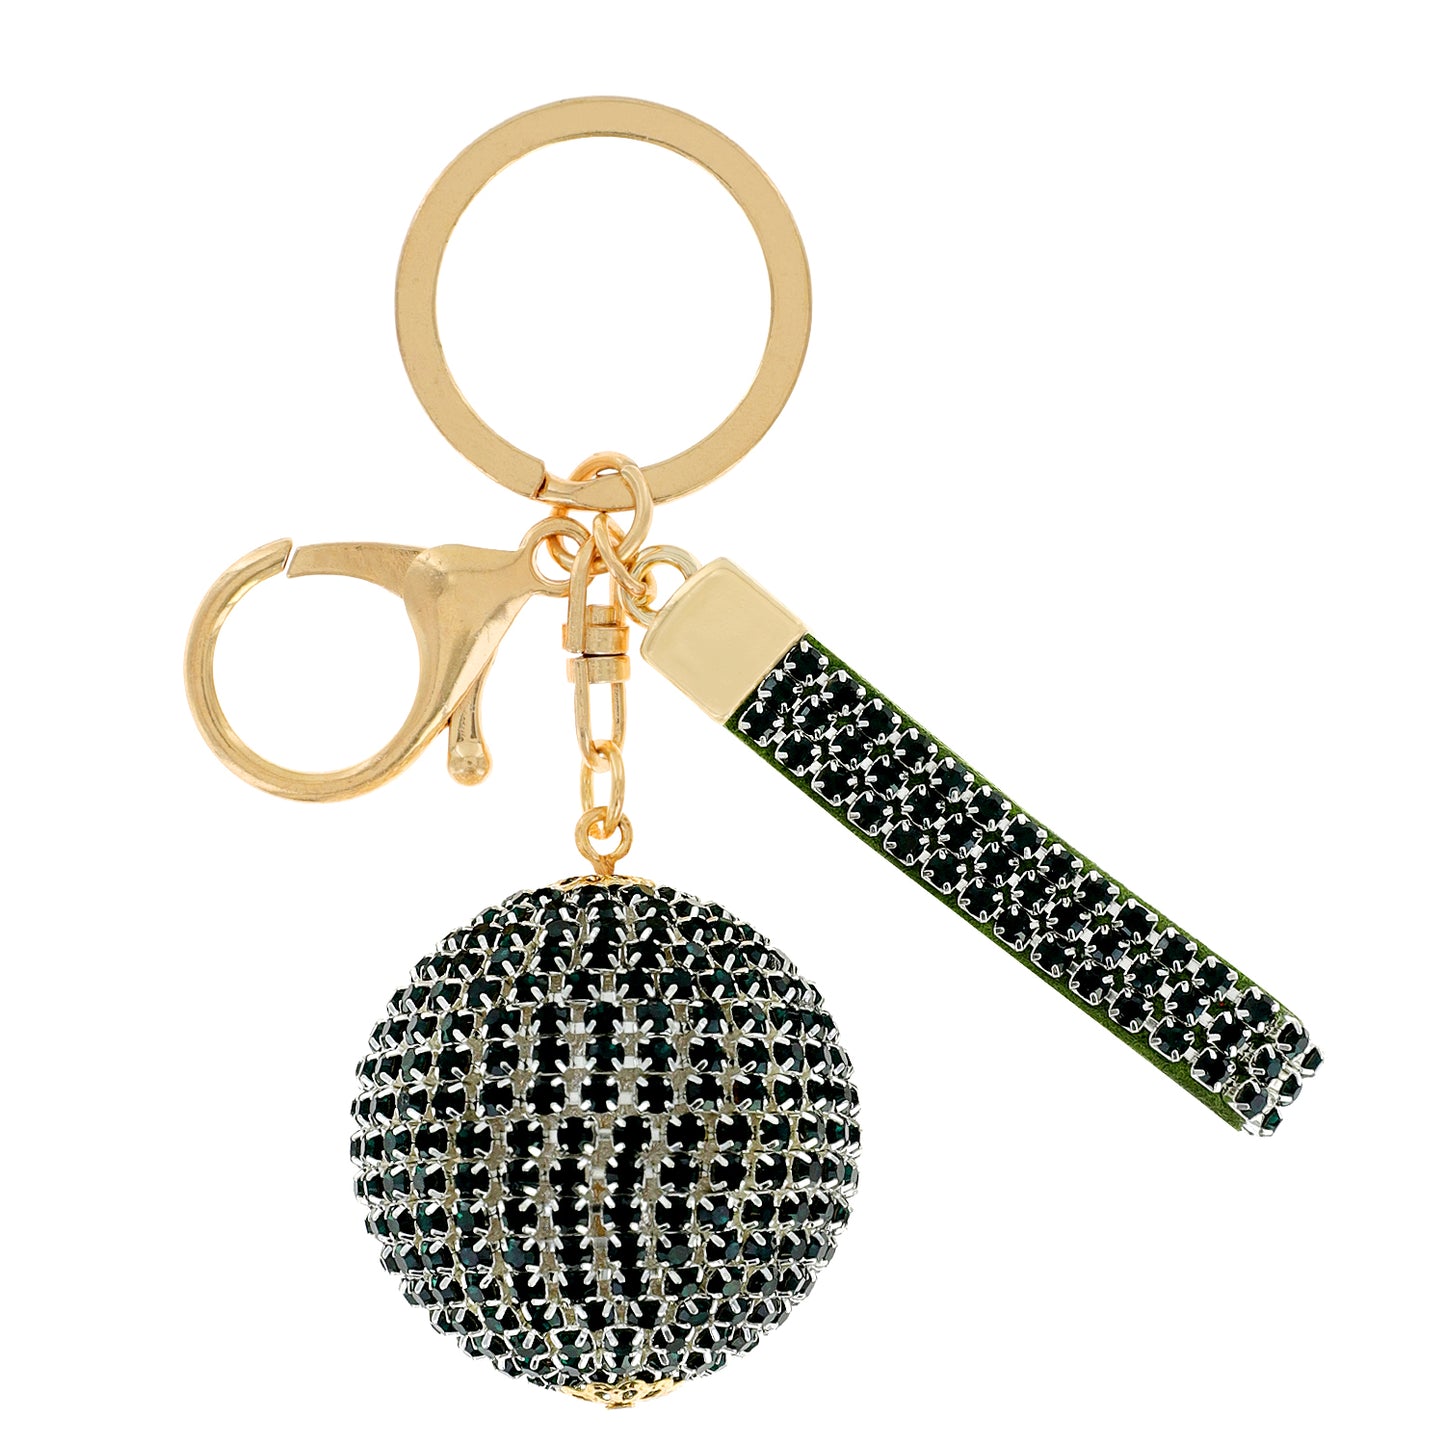 Fashion Rhinestone Ball Key Chain with Wristlet - Green